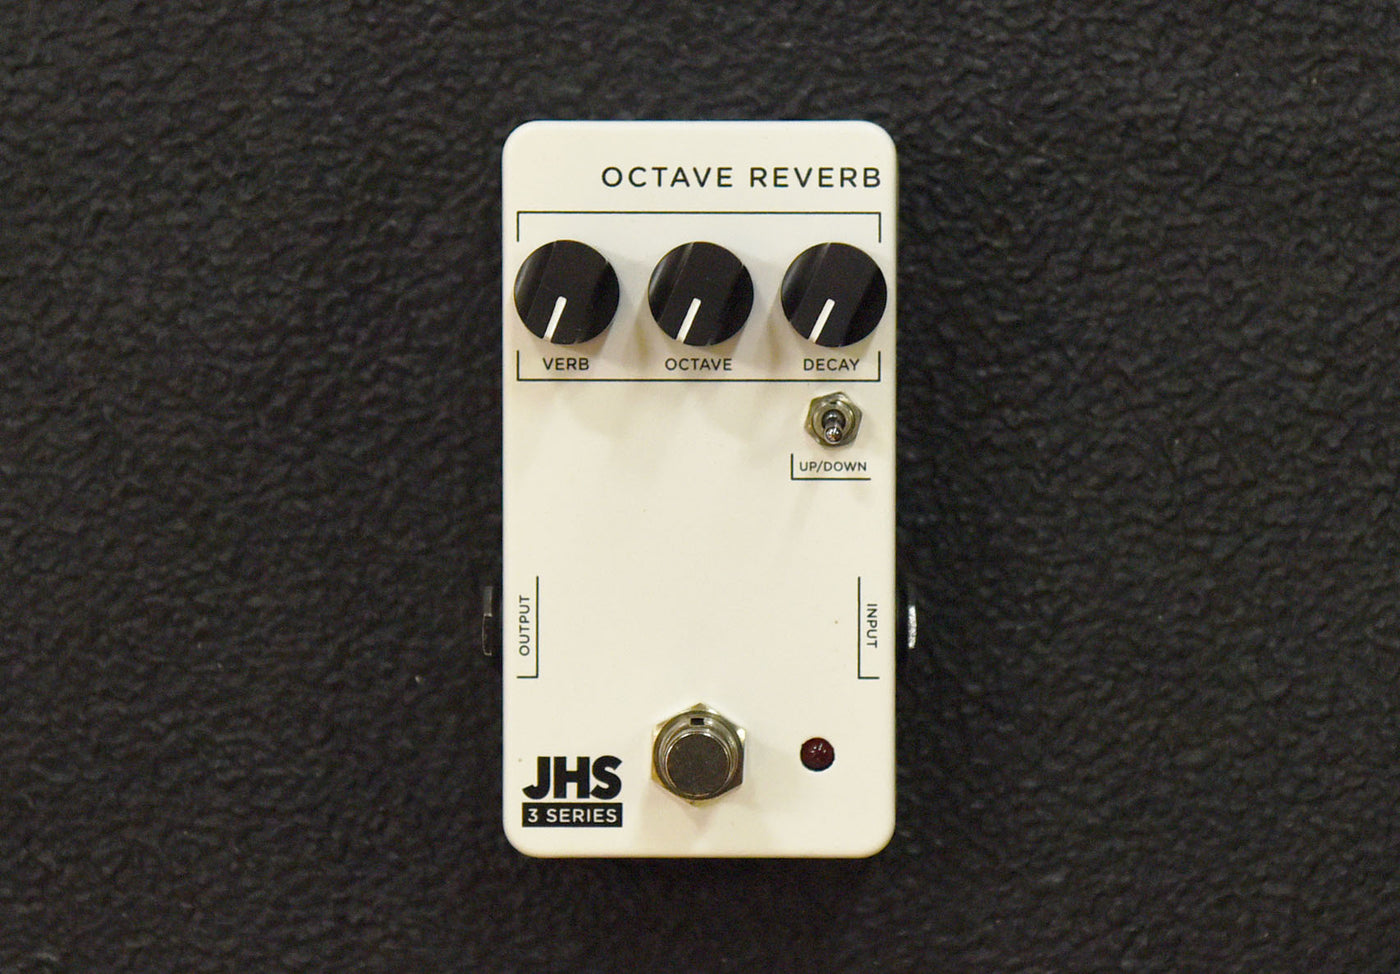 Series 3 Octave Reverb